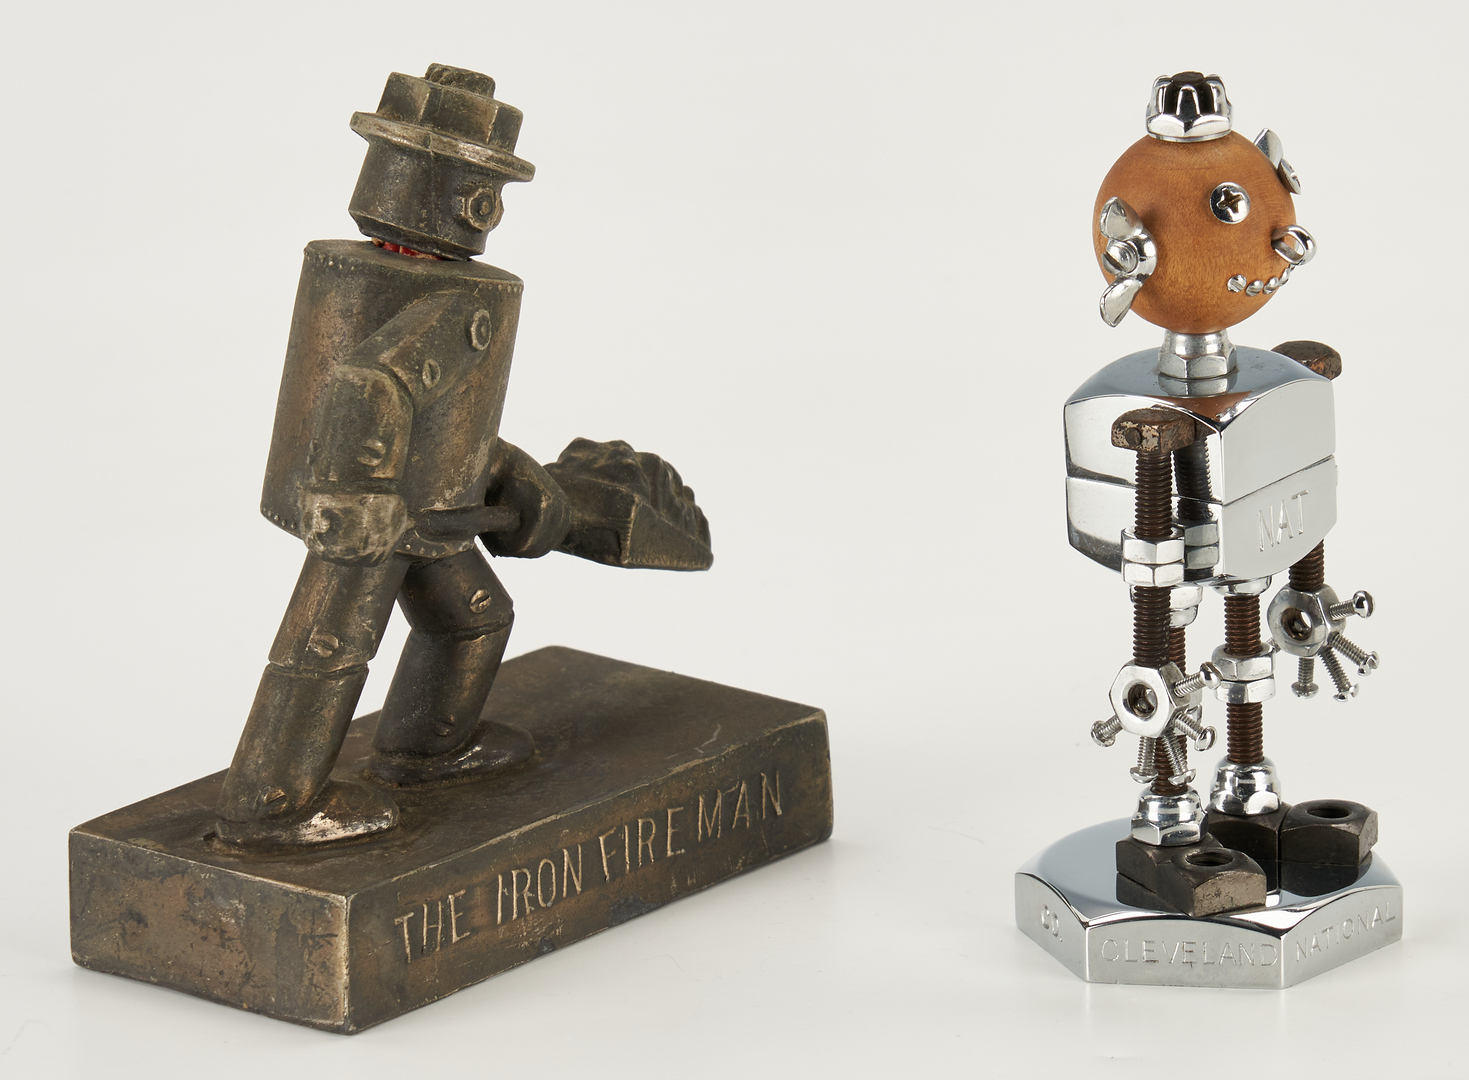 Lot 406: 4 Desk Items, incl. Robot Paperweights, F.D.R. Lamp